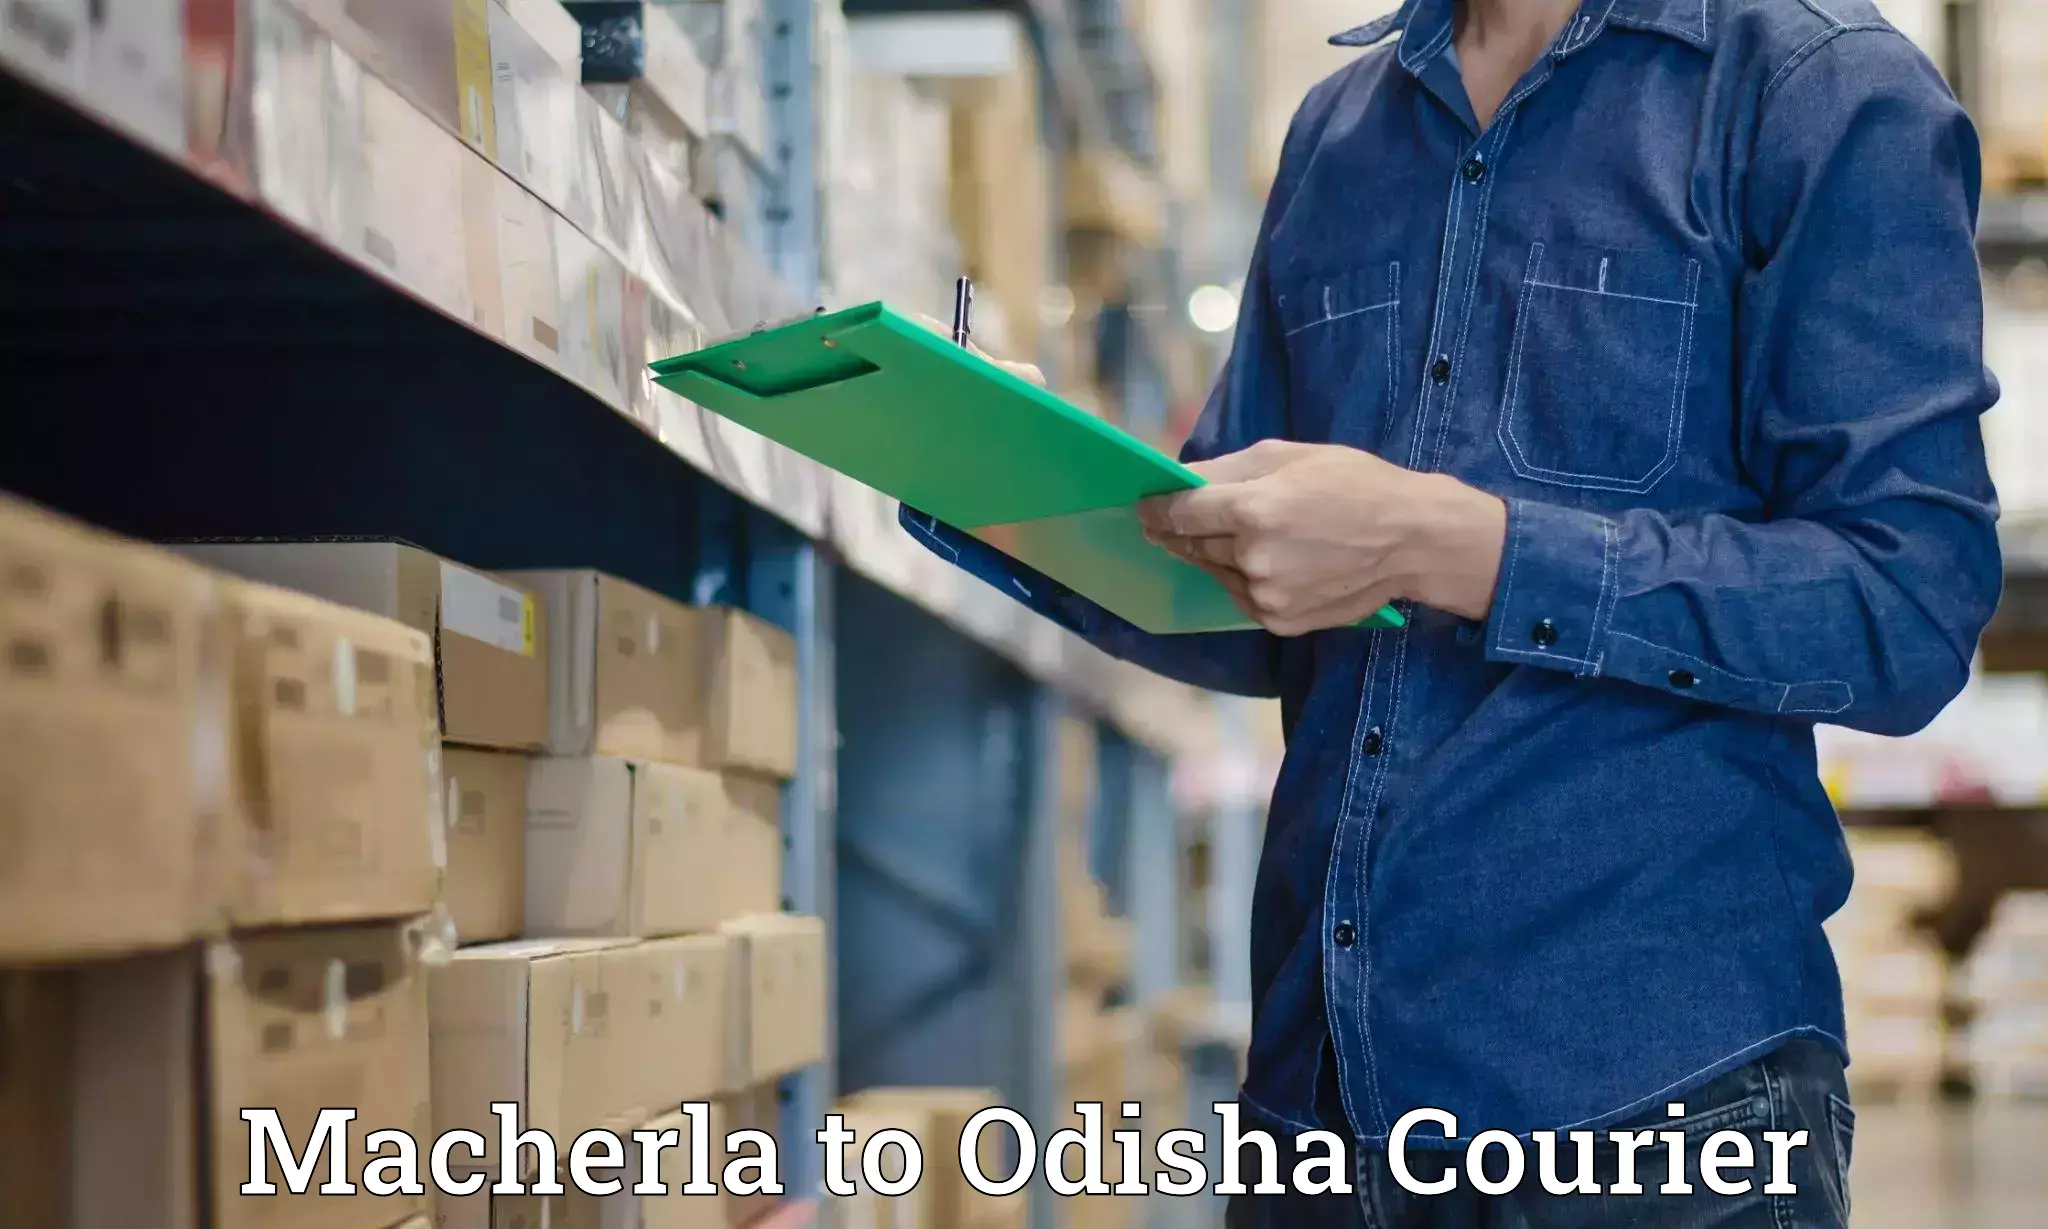 Advanced tracking systems Macherla to Odisha